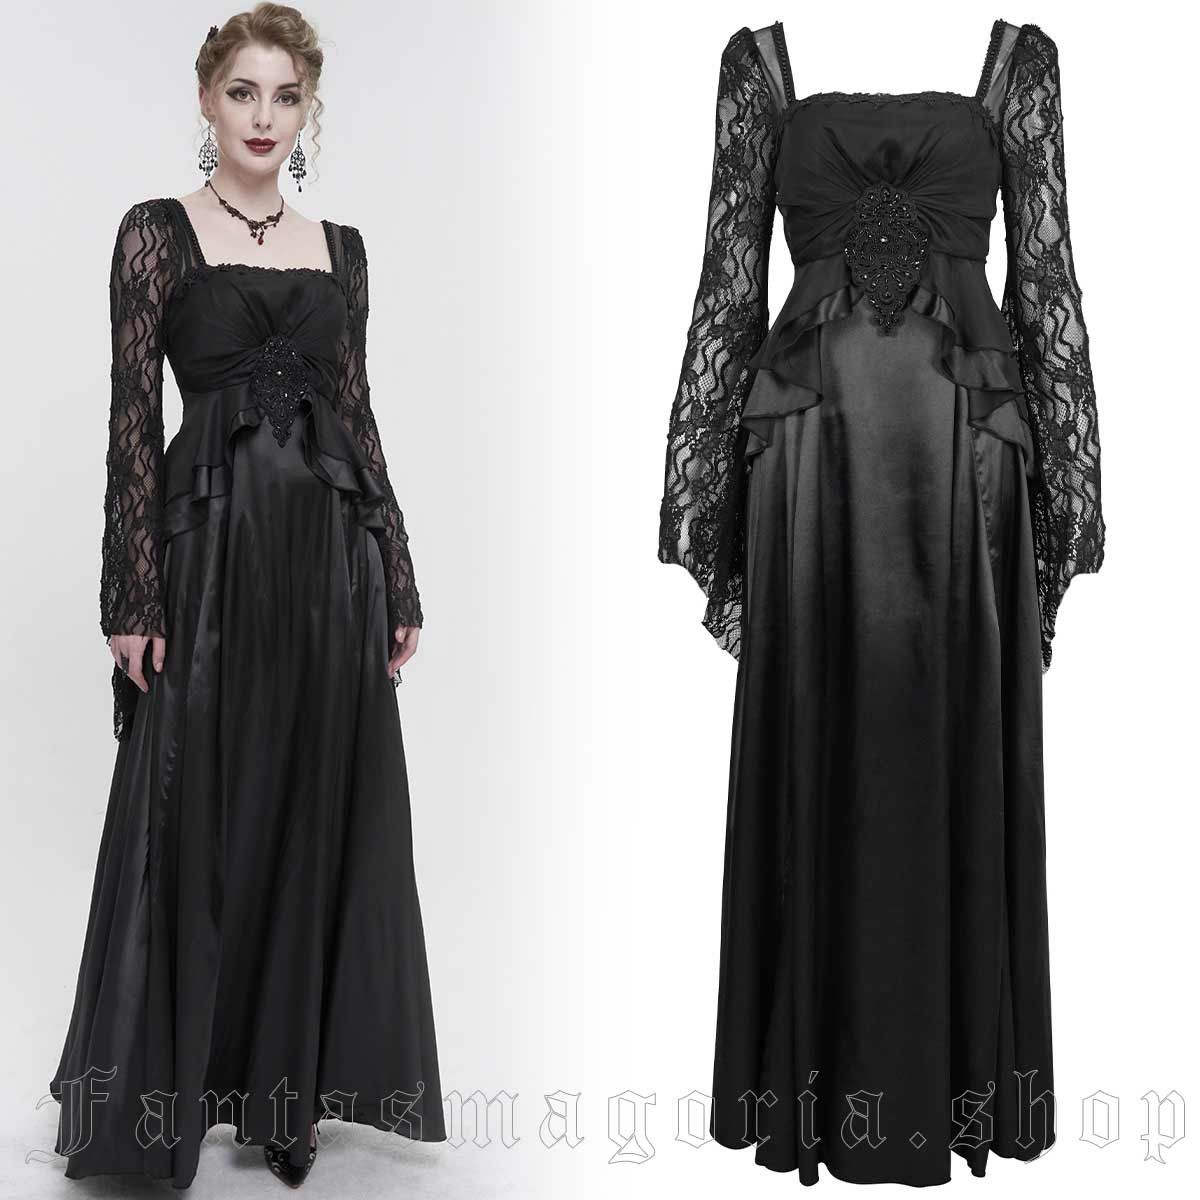 Women's Gothic black satin long flared lace sleeve peplum waist detail square neckline long dress. - Eva Lady - ESKT03701